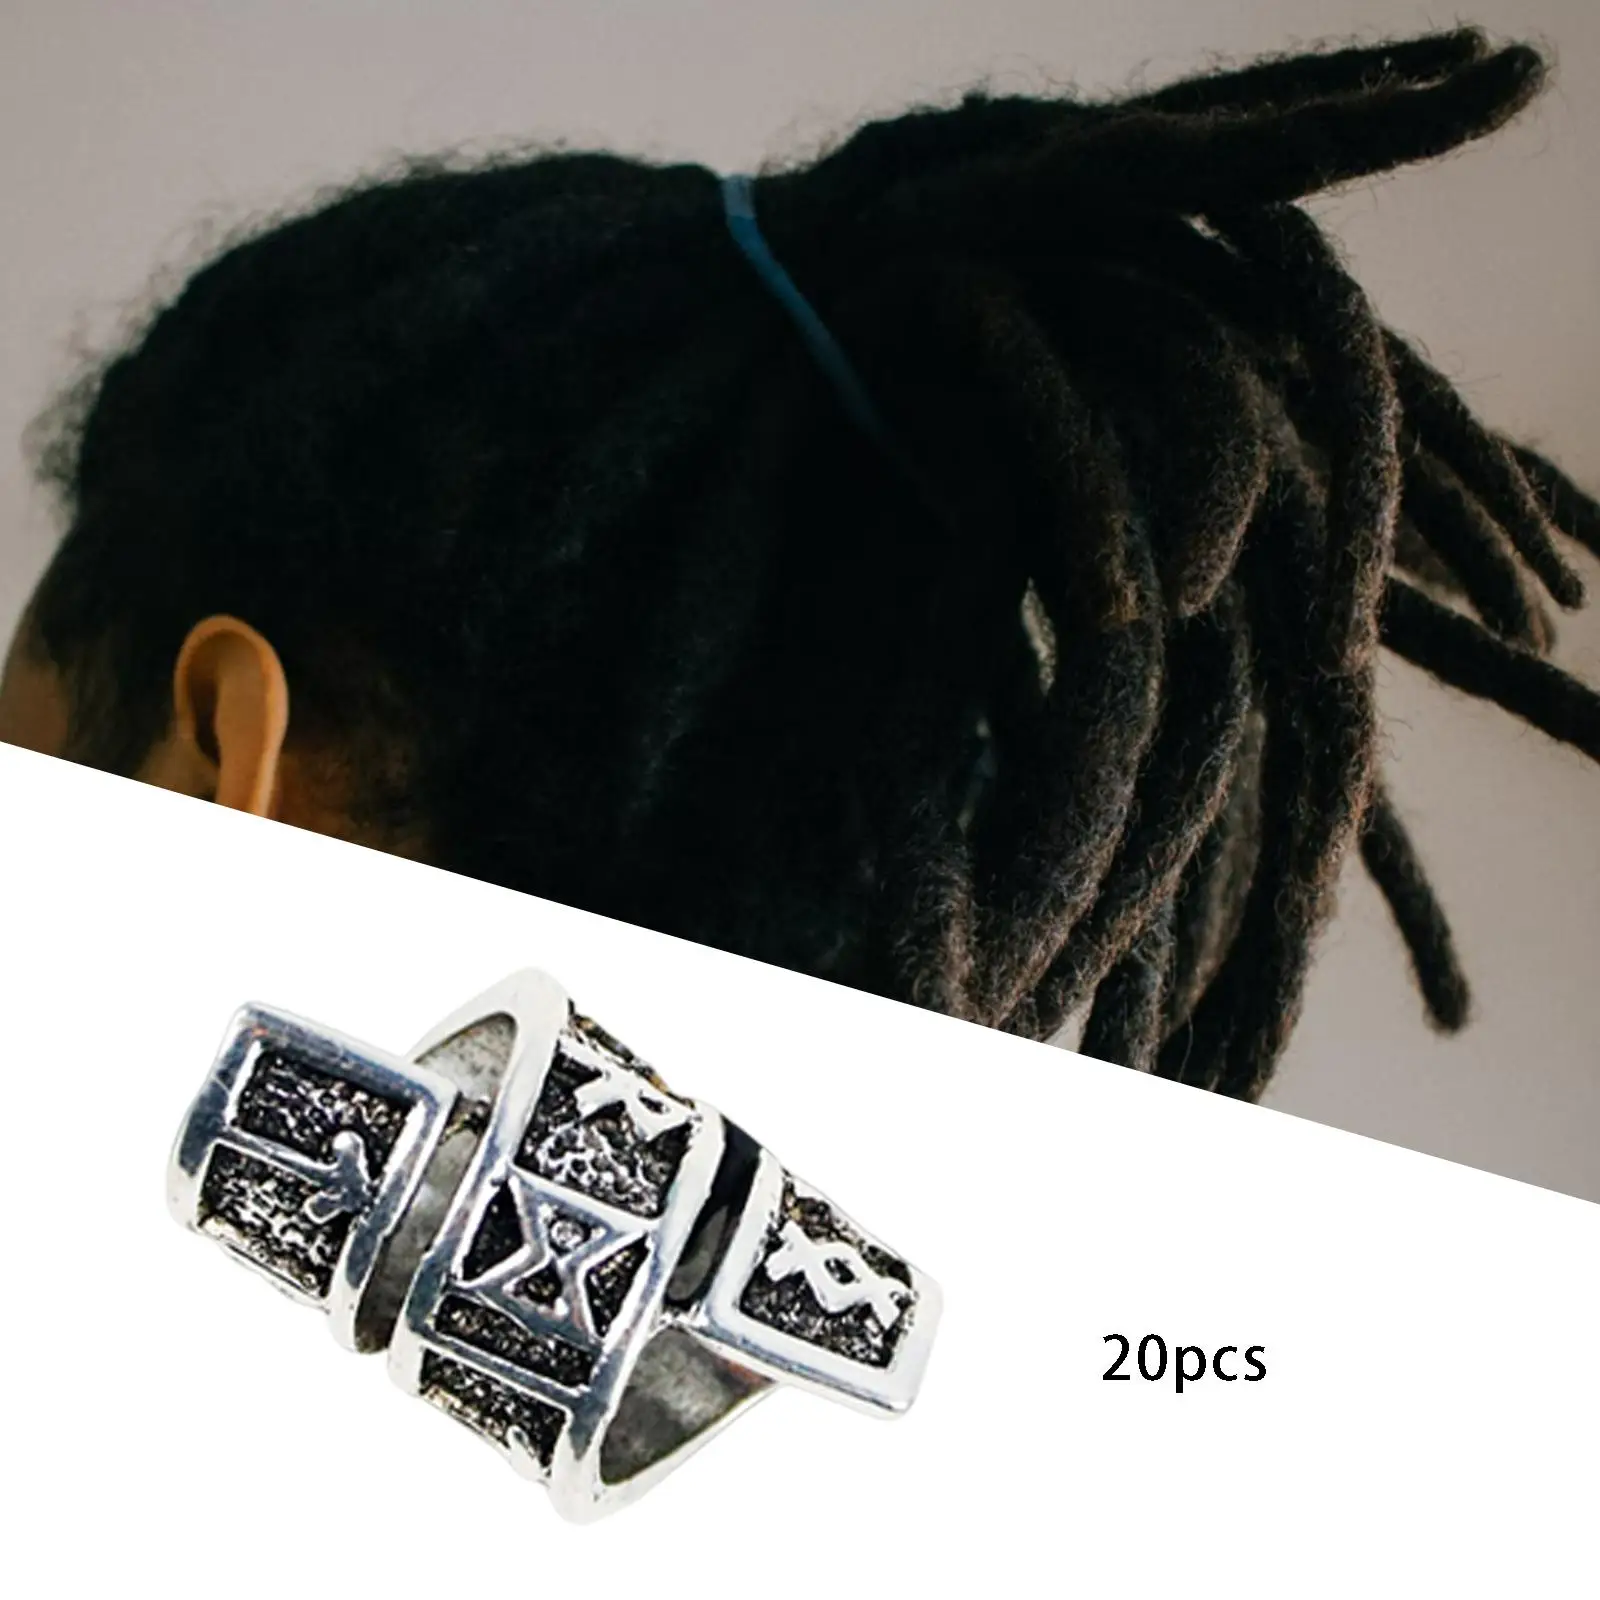 20x Beard Beads Braids Beads Metal Dreadlocks Beads for Necklace diy braid Decoration